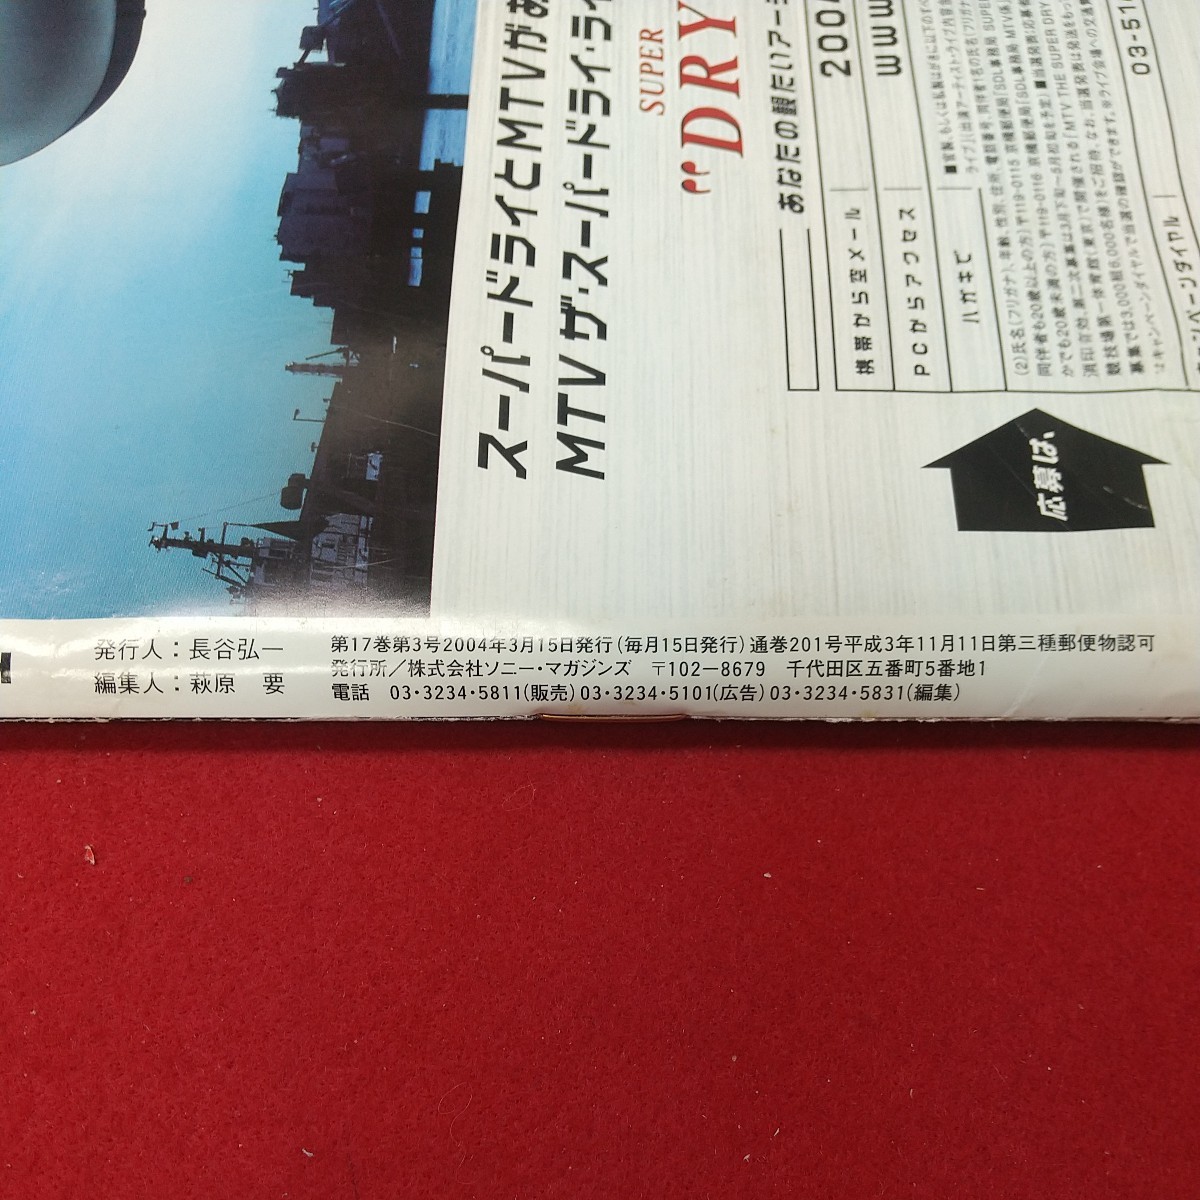 c-524 *8wa twin 2004 год 3 месяц номер 2004 год 3 месяц 15 день выпуск Sony * журнал z журнал музыка художник B\'z GLAY Utada Hikaru Kishidan 